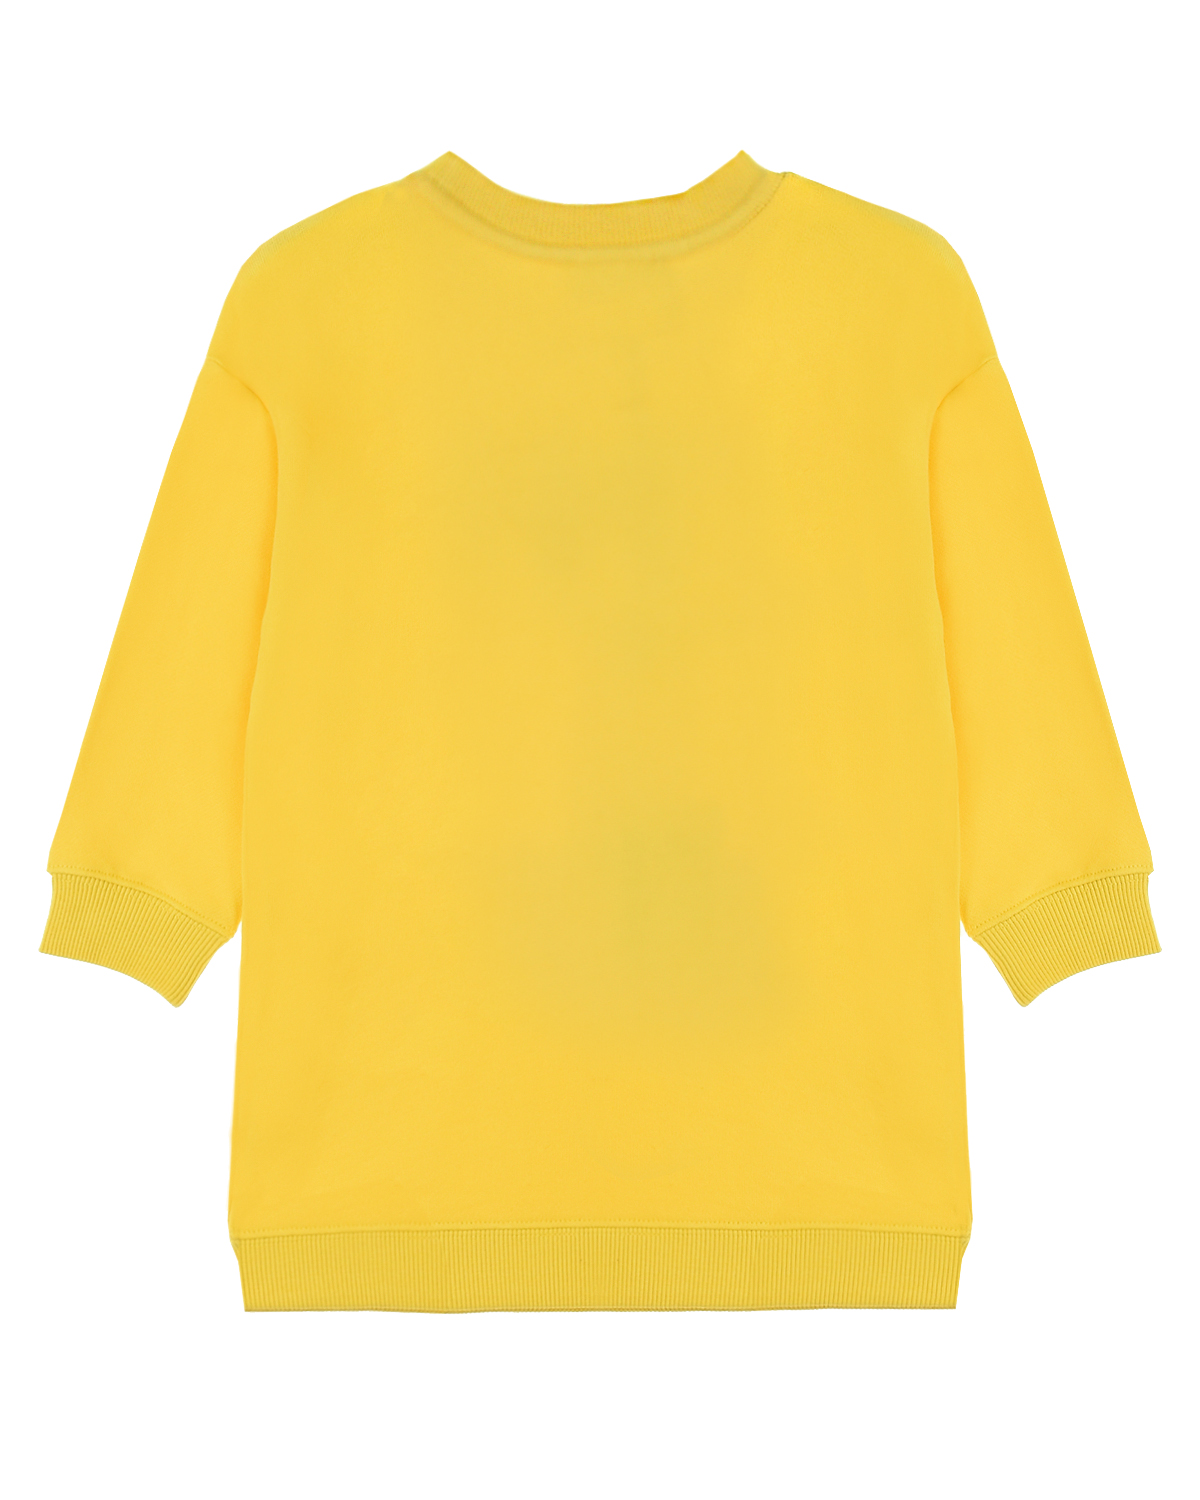 Желтое трикотажное платье Marc Jacobs (The) детское, размер 98, цвет желтый Желтое трикотажное платье Marc Jacobs (The) детское - фото 2